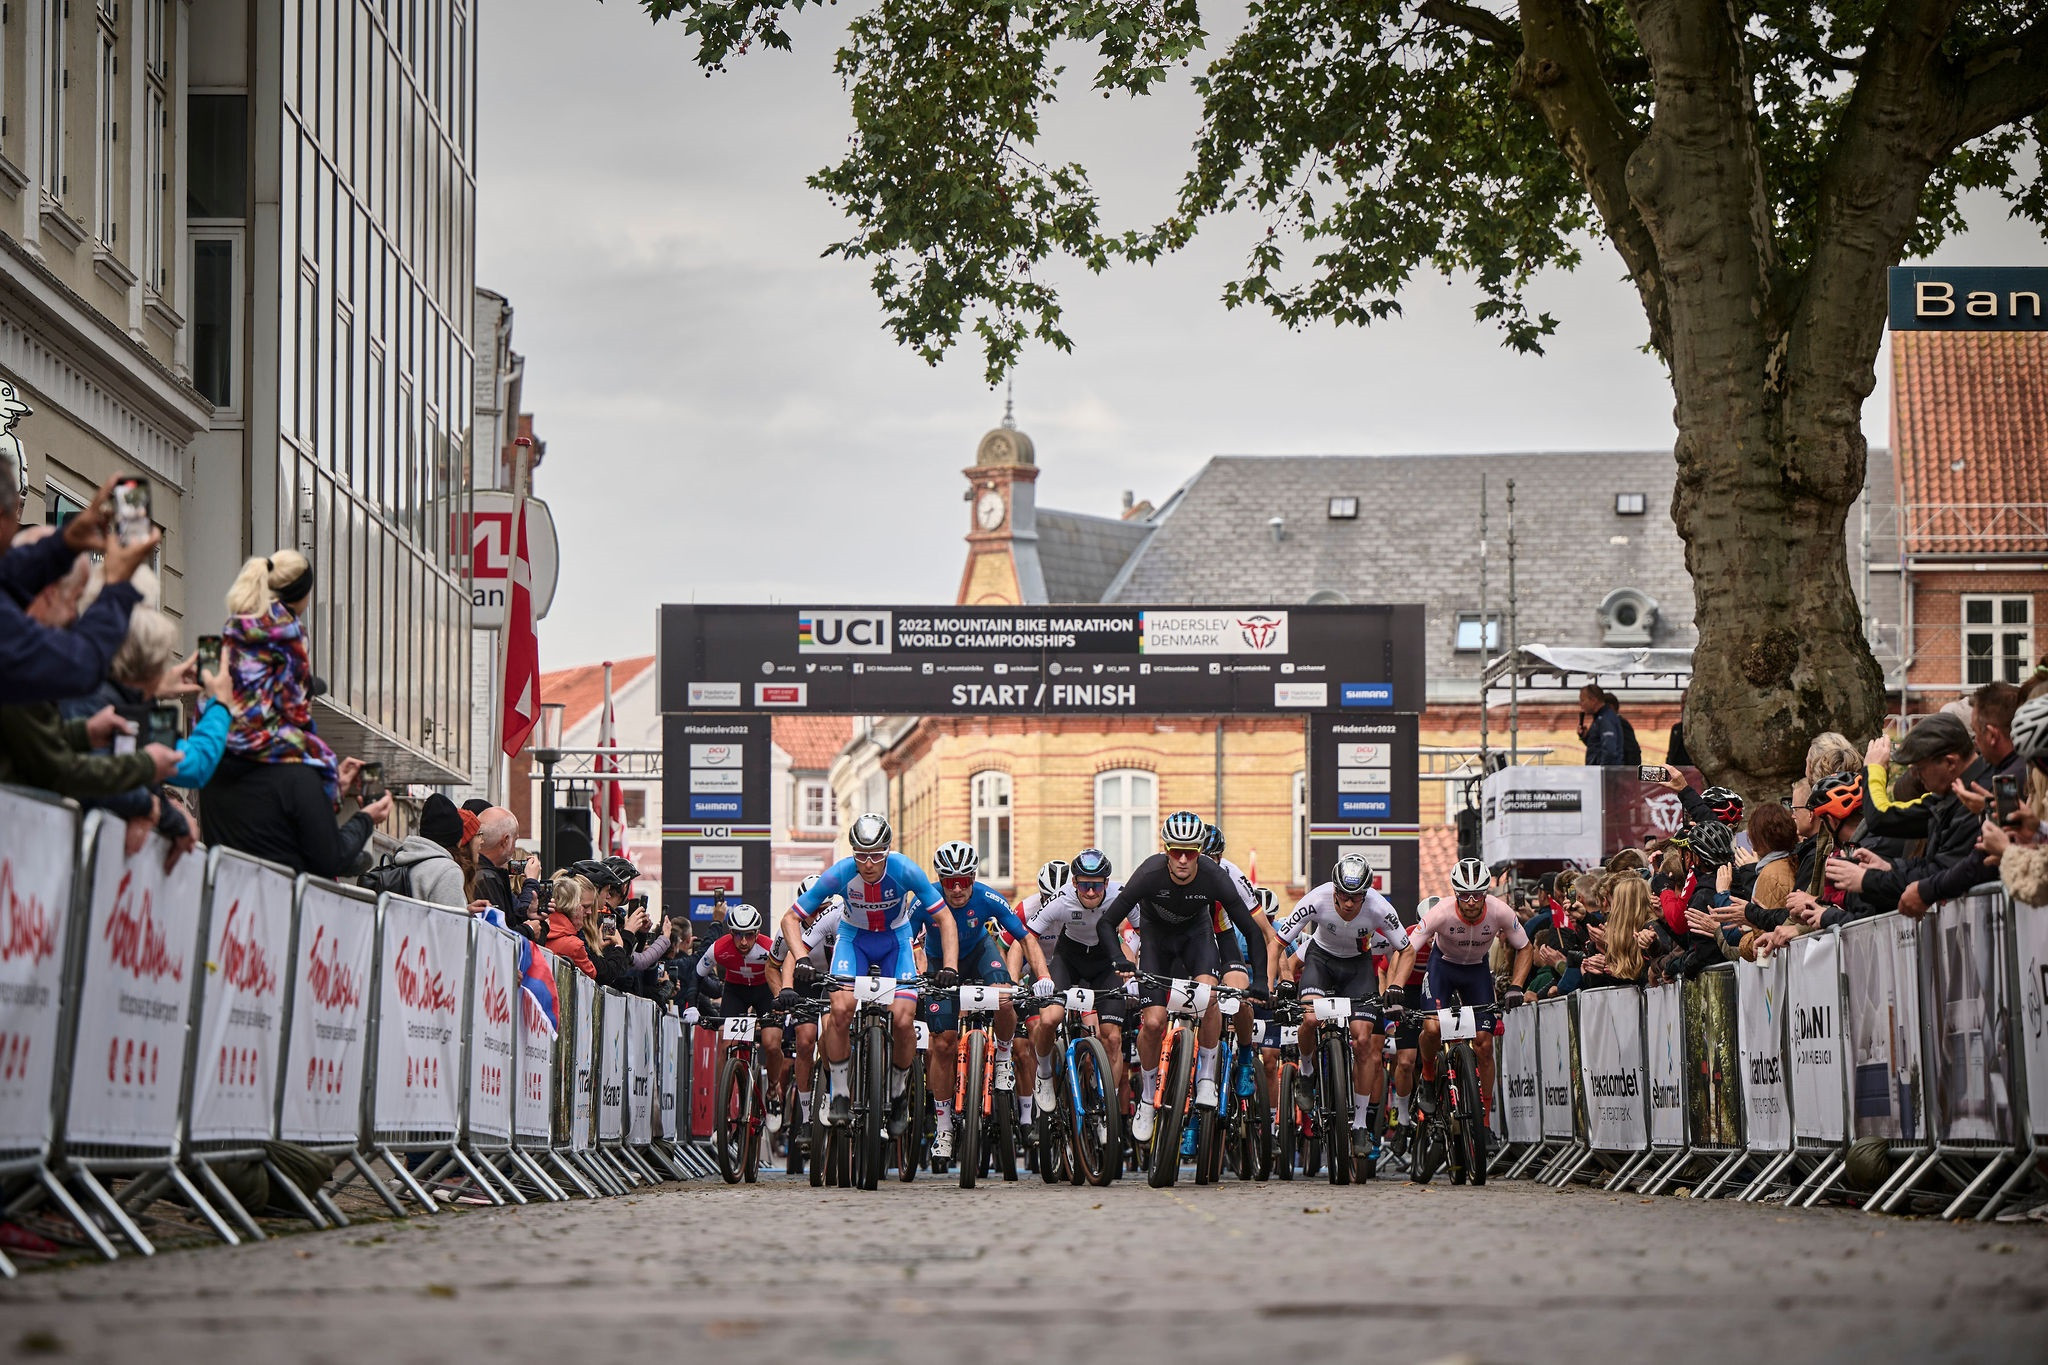 The historic Danish town of Haderslev hosted the UCI Mountain Bike Marathon World Championships ©Ard Jongsma (Triangle Region)